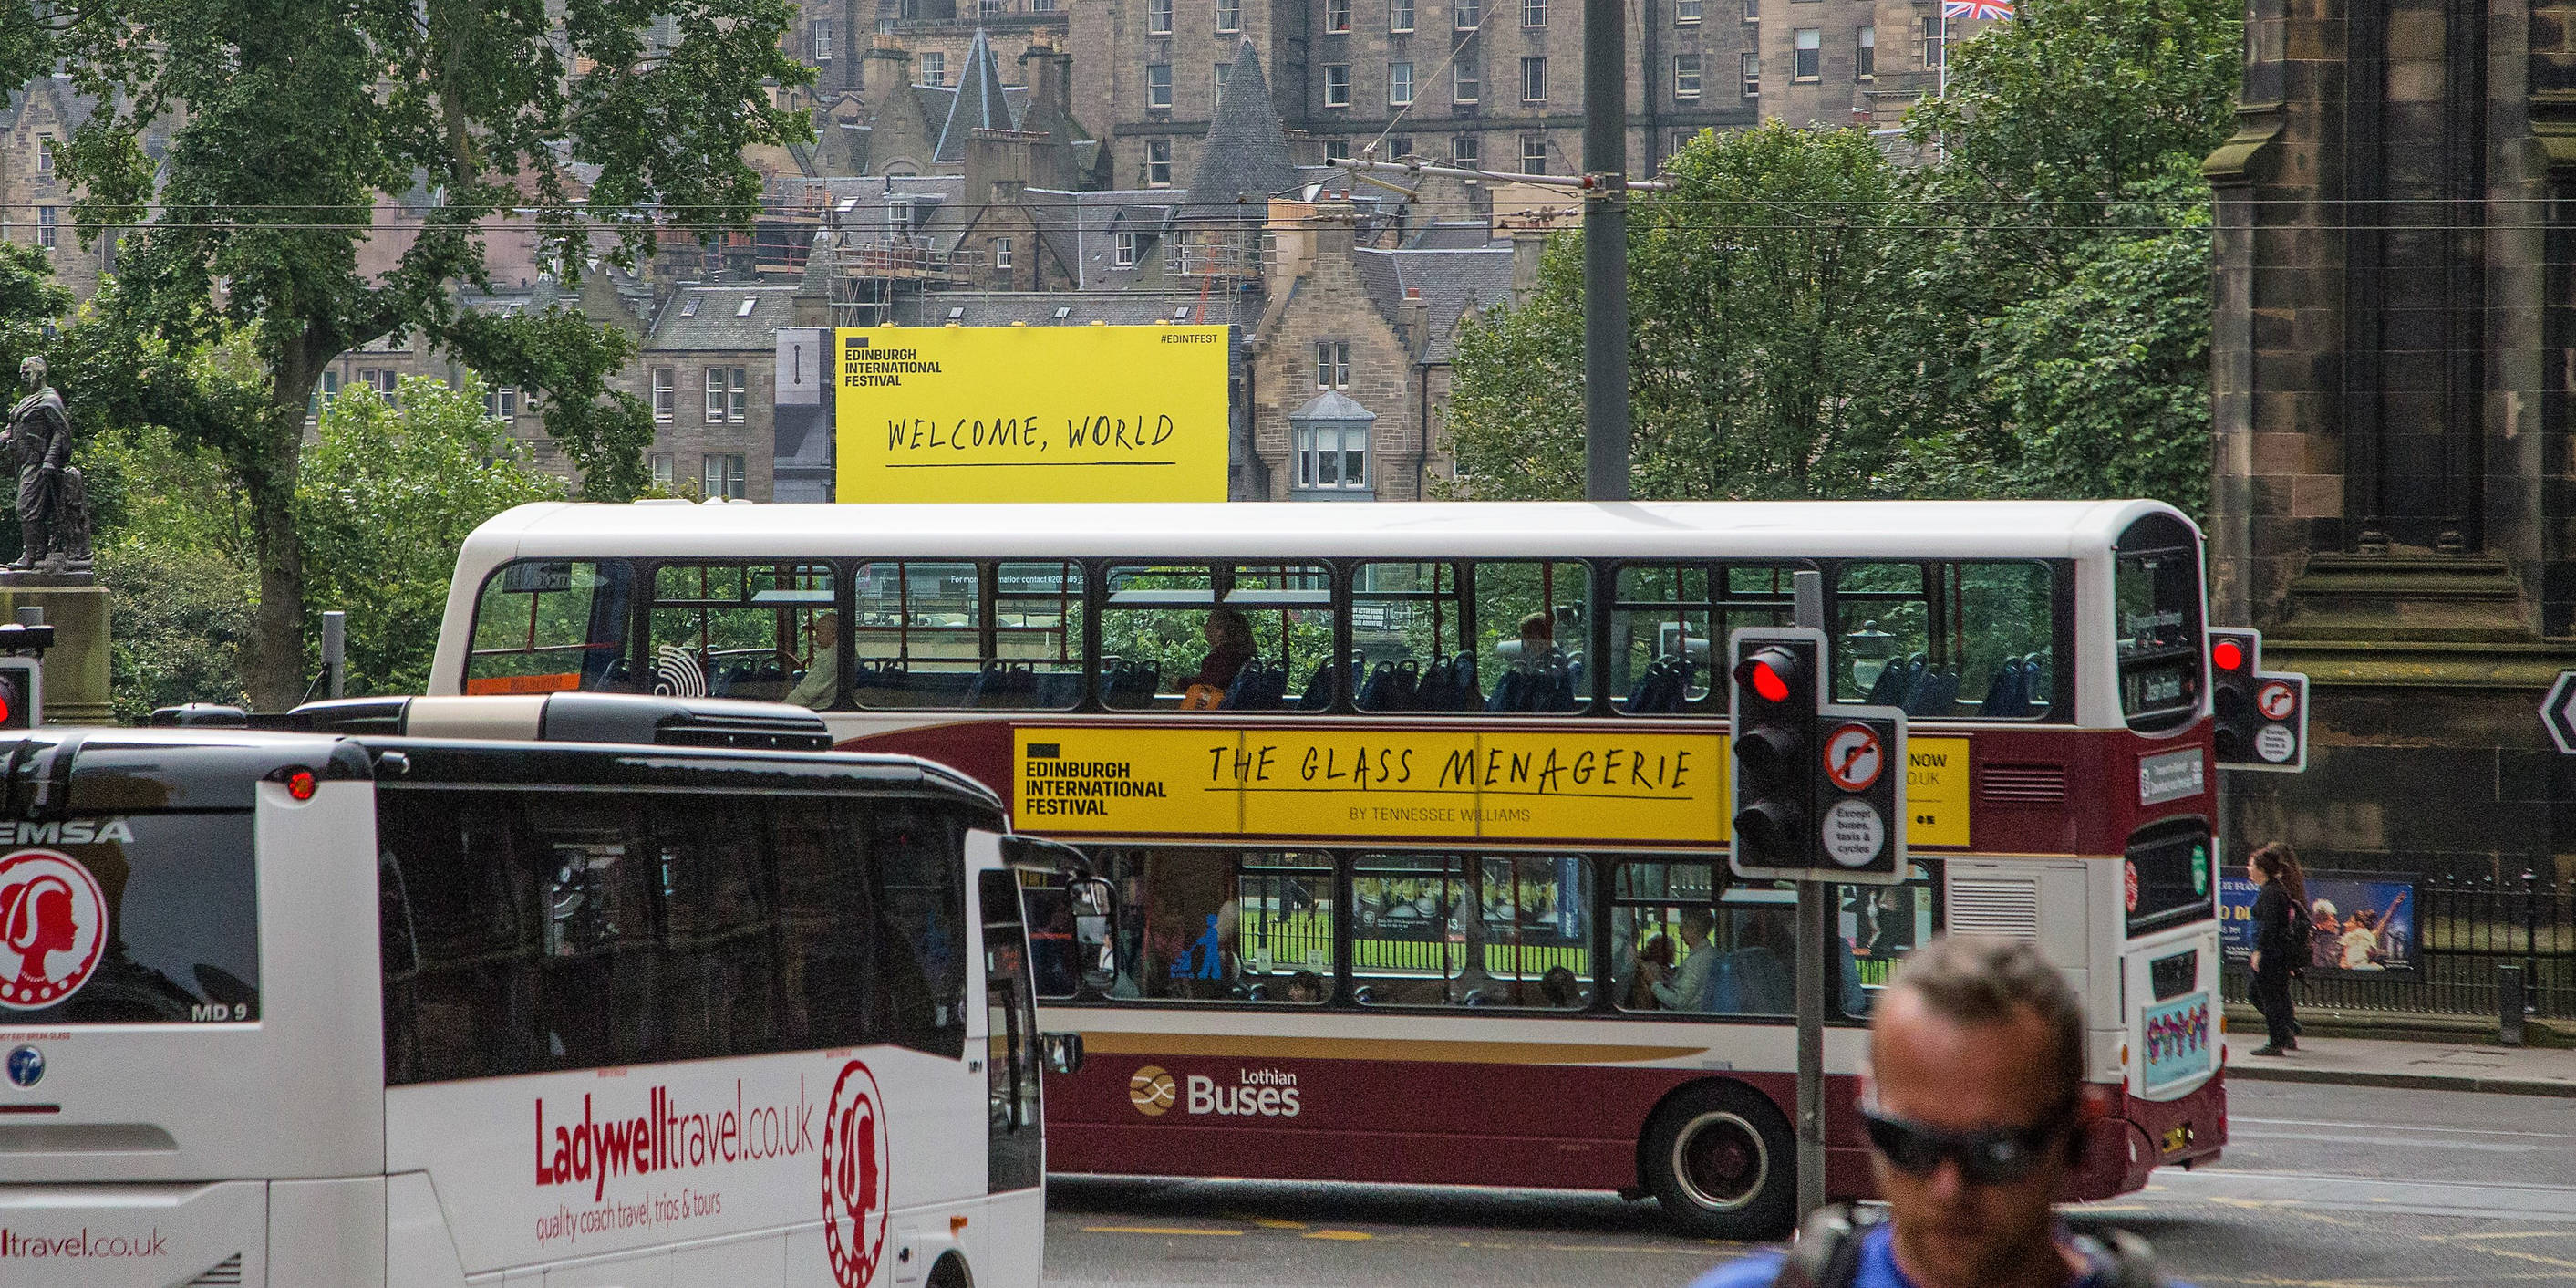 Edinburgh International Festival banner on a bus